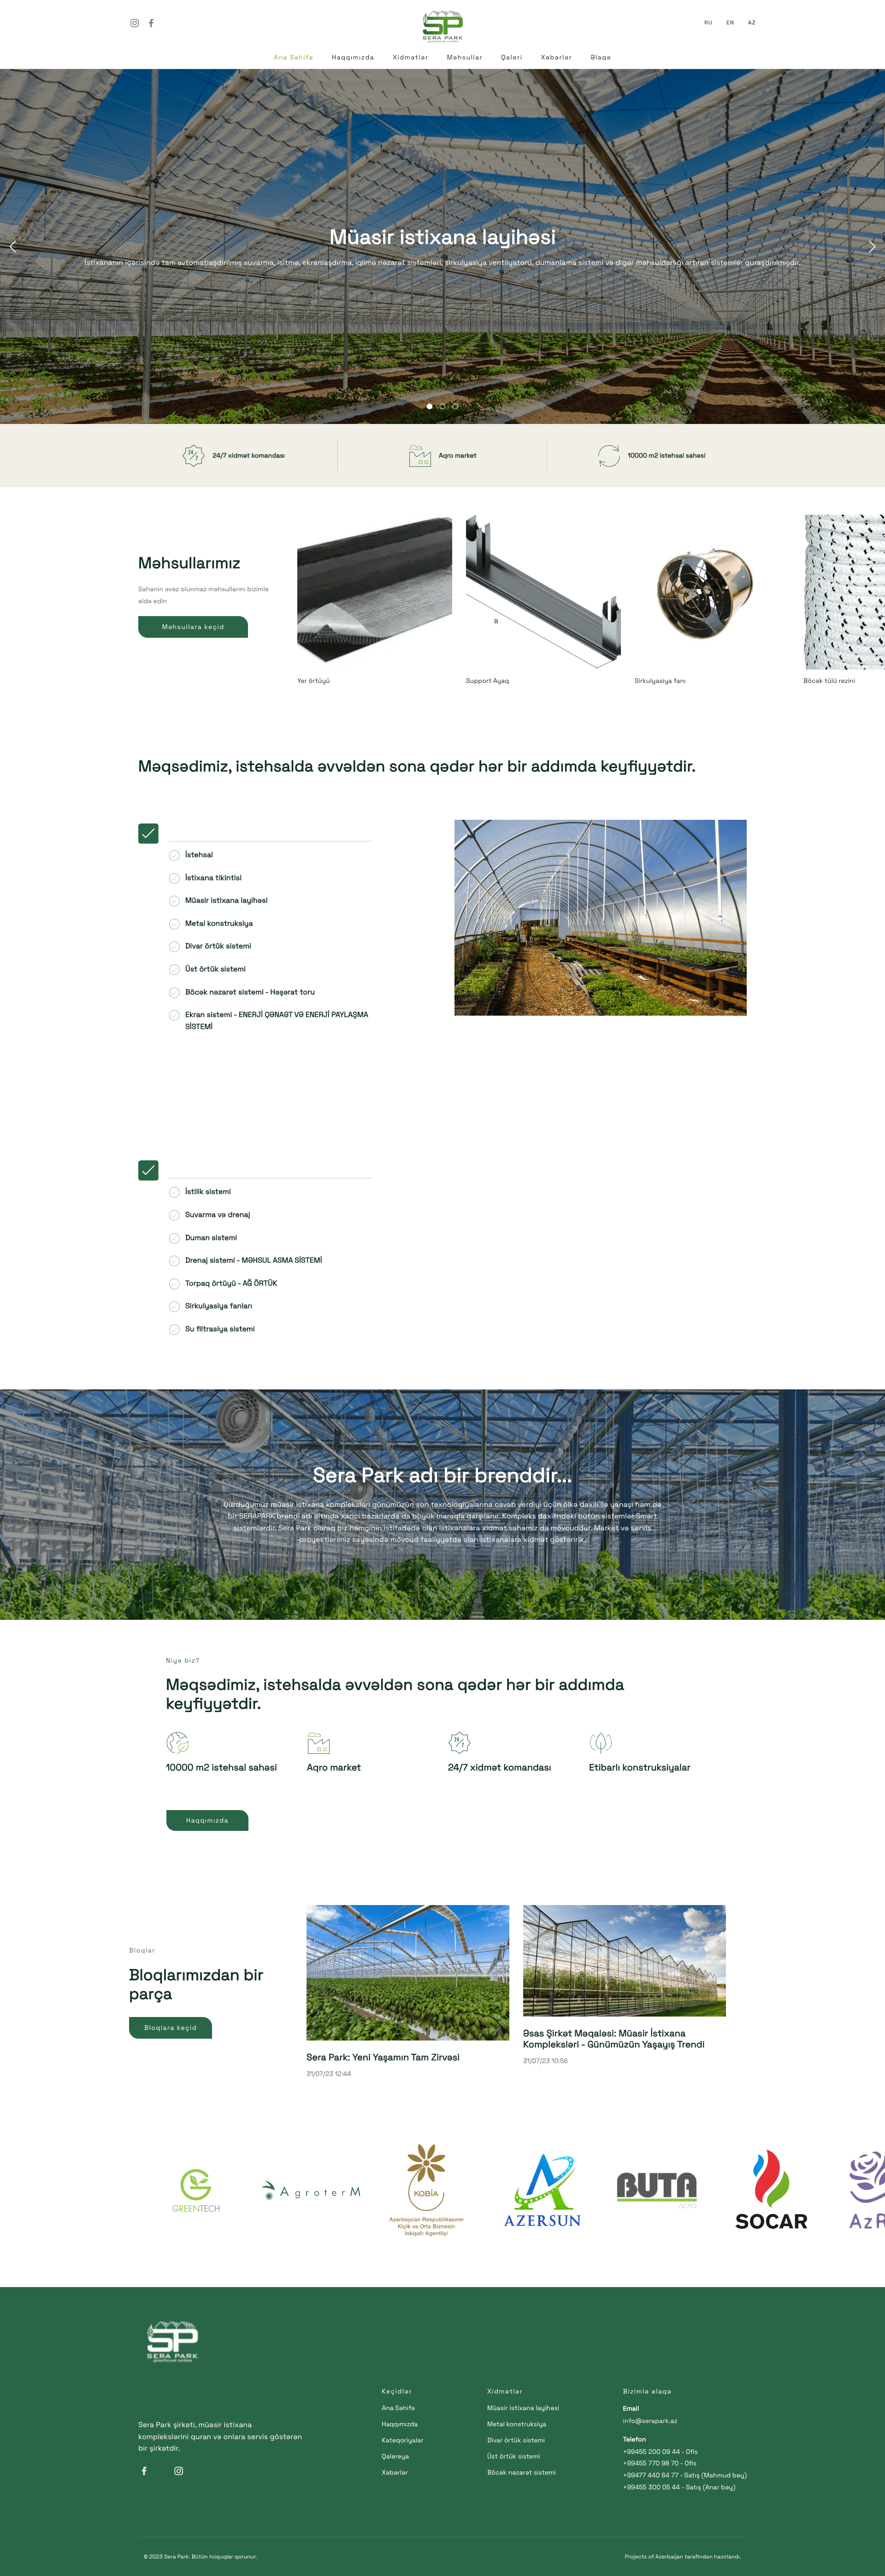 Projects of Azerbaijan